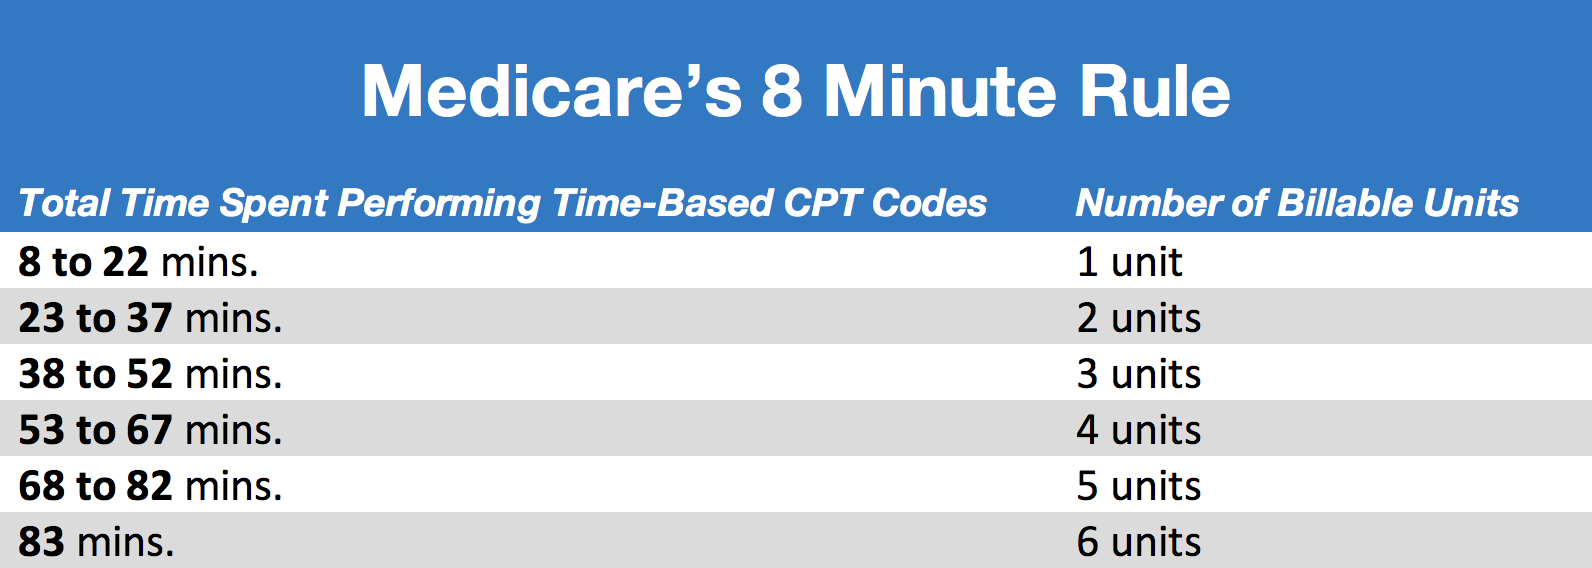 Medicare 8 Minute Rule Chart